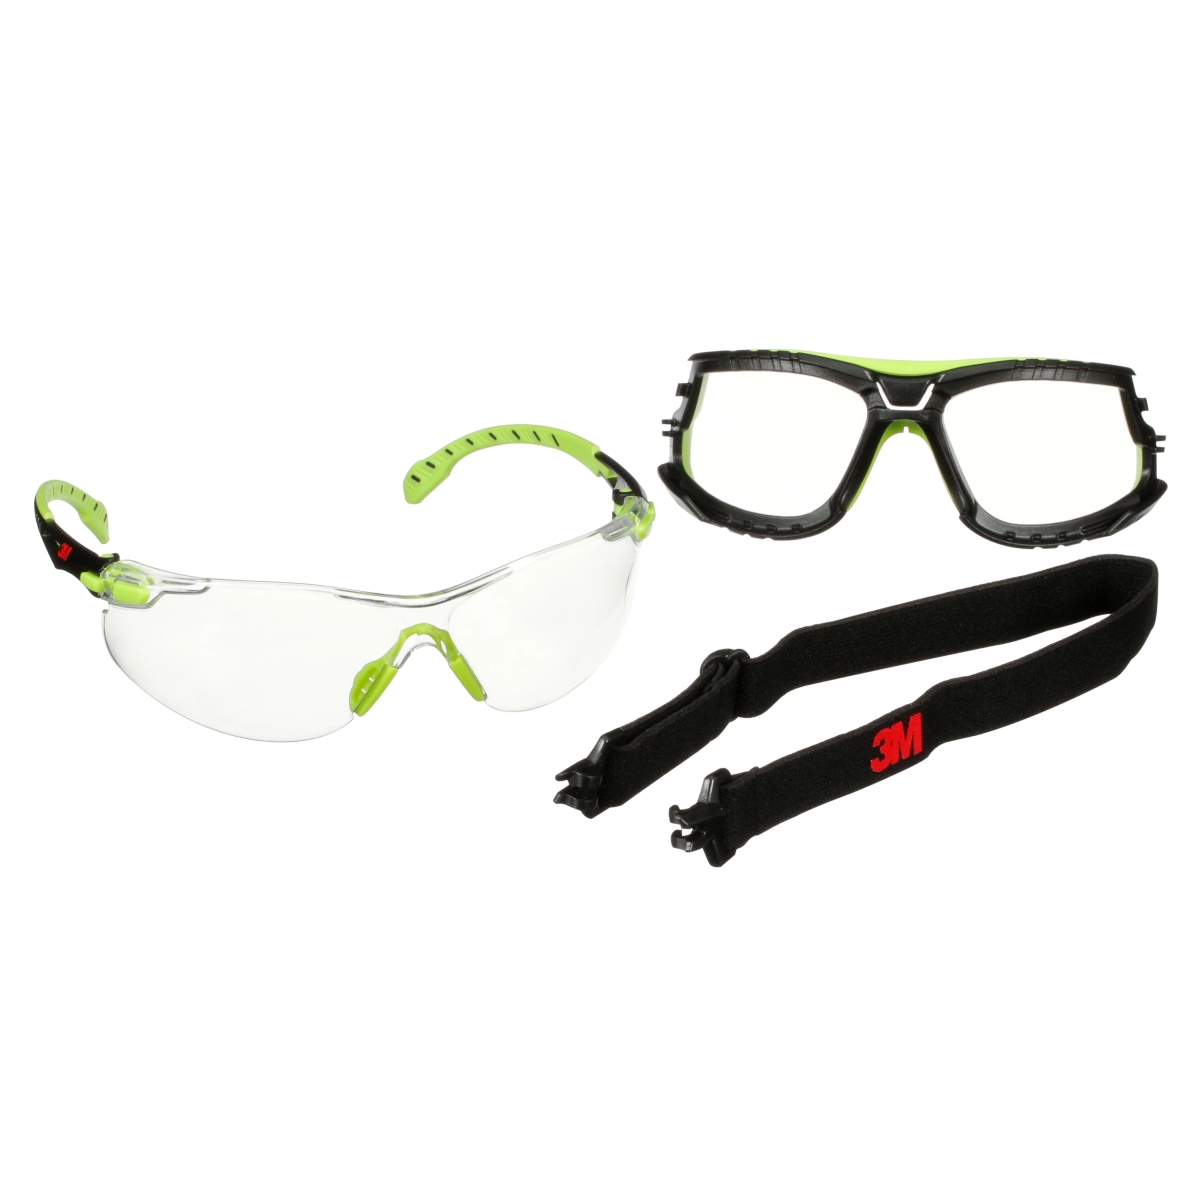 occhiali di sicurezza 3M Solus 1000, aste verdi/nere, rivestimento Scotchgard antiappannamento/antigraffio (K&amp;N), lenti chiare, guarnizione e fascia in TPE, S1201SGAF-TSKT-EU